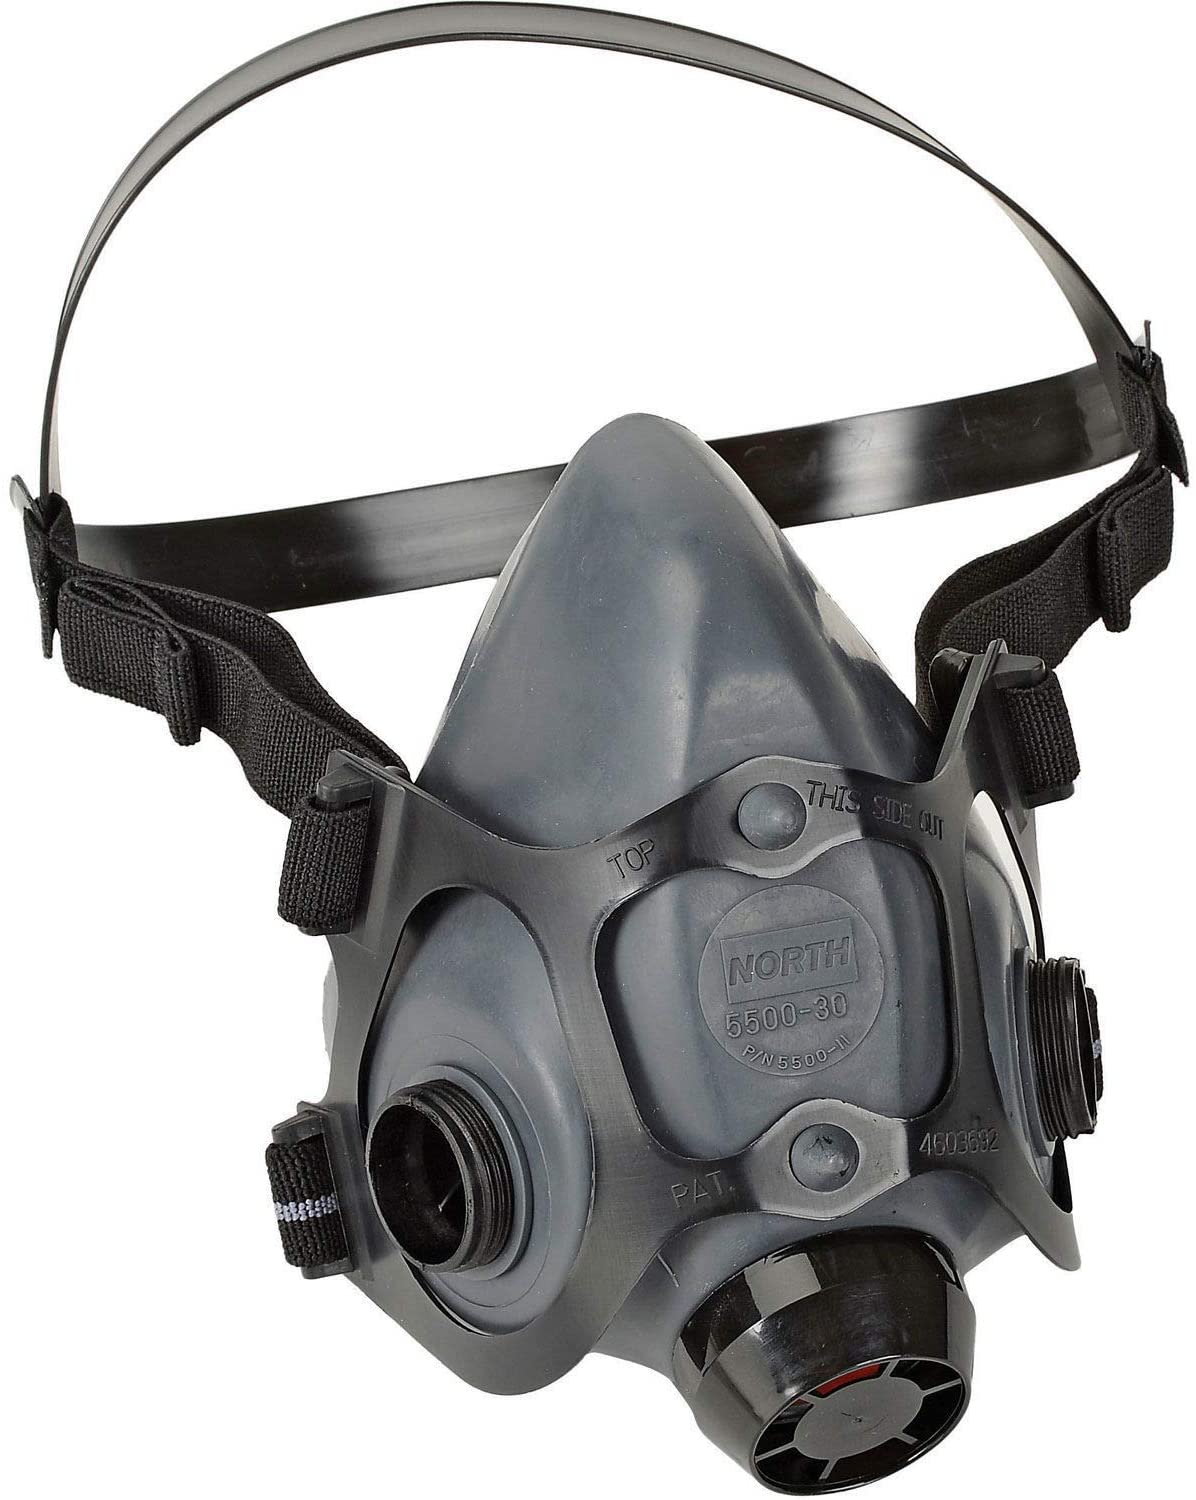 Honeywell North 5500 Series Half-face Mask Respirator, Large - 5500-30L